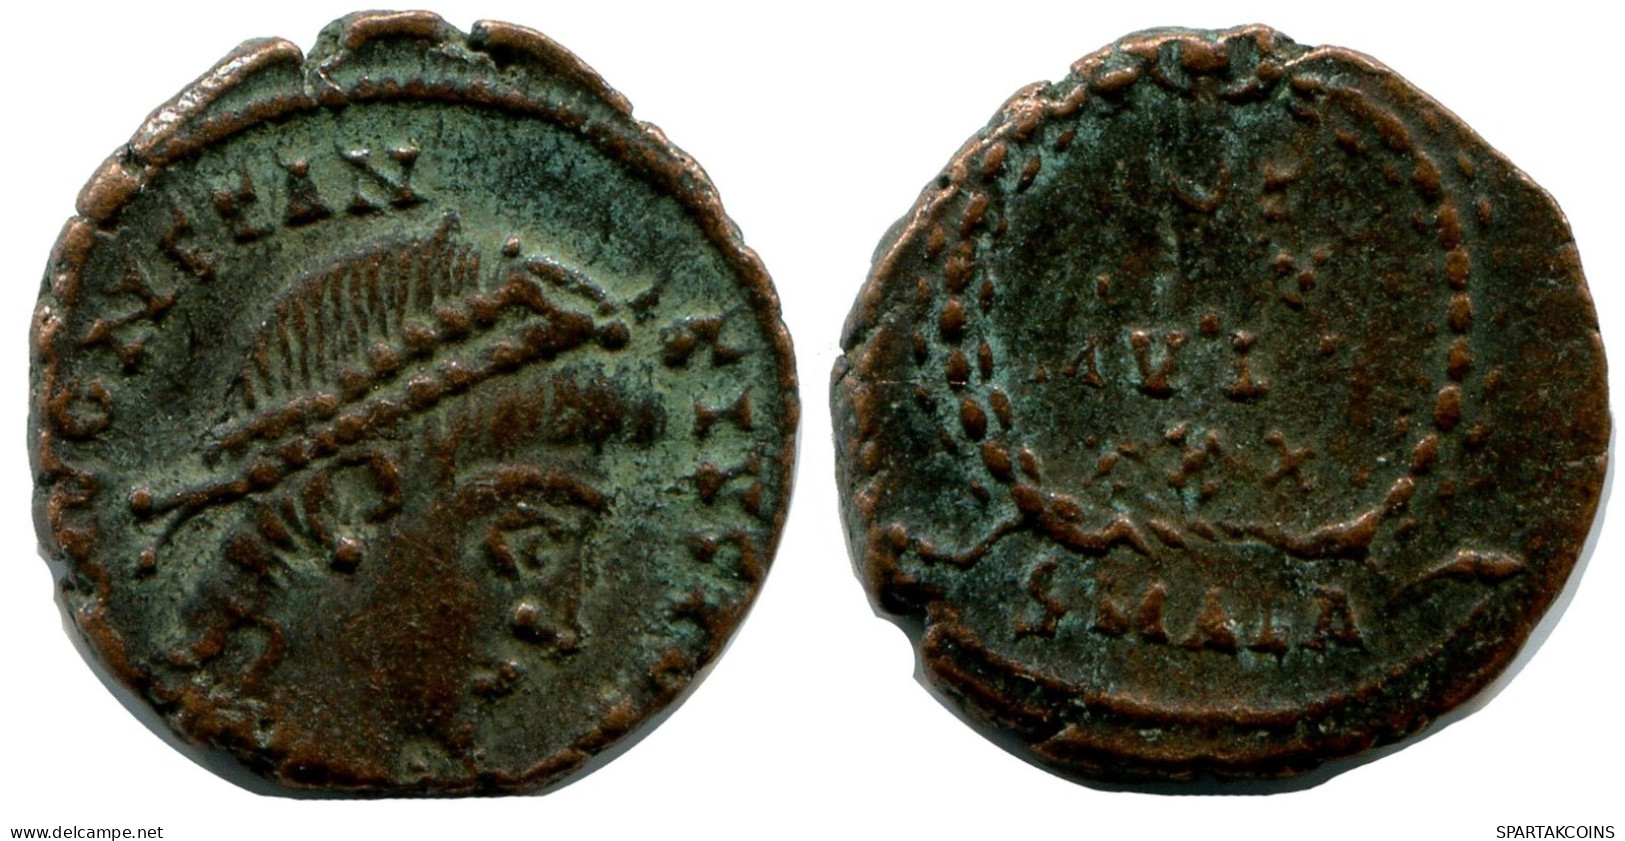 CONSTANTIUS II MINTED IN ALEKSANDRIA FOUND IN IHNASYAH HOARD #ANC10239.14.U.A - El Impero Christiano (307 / 363)